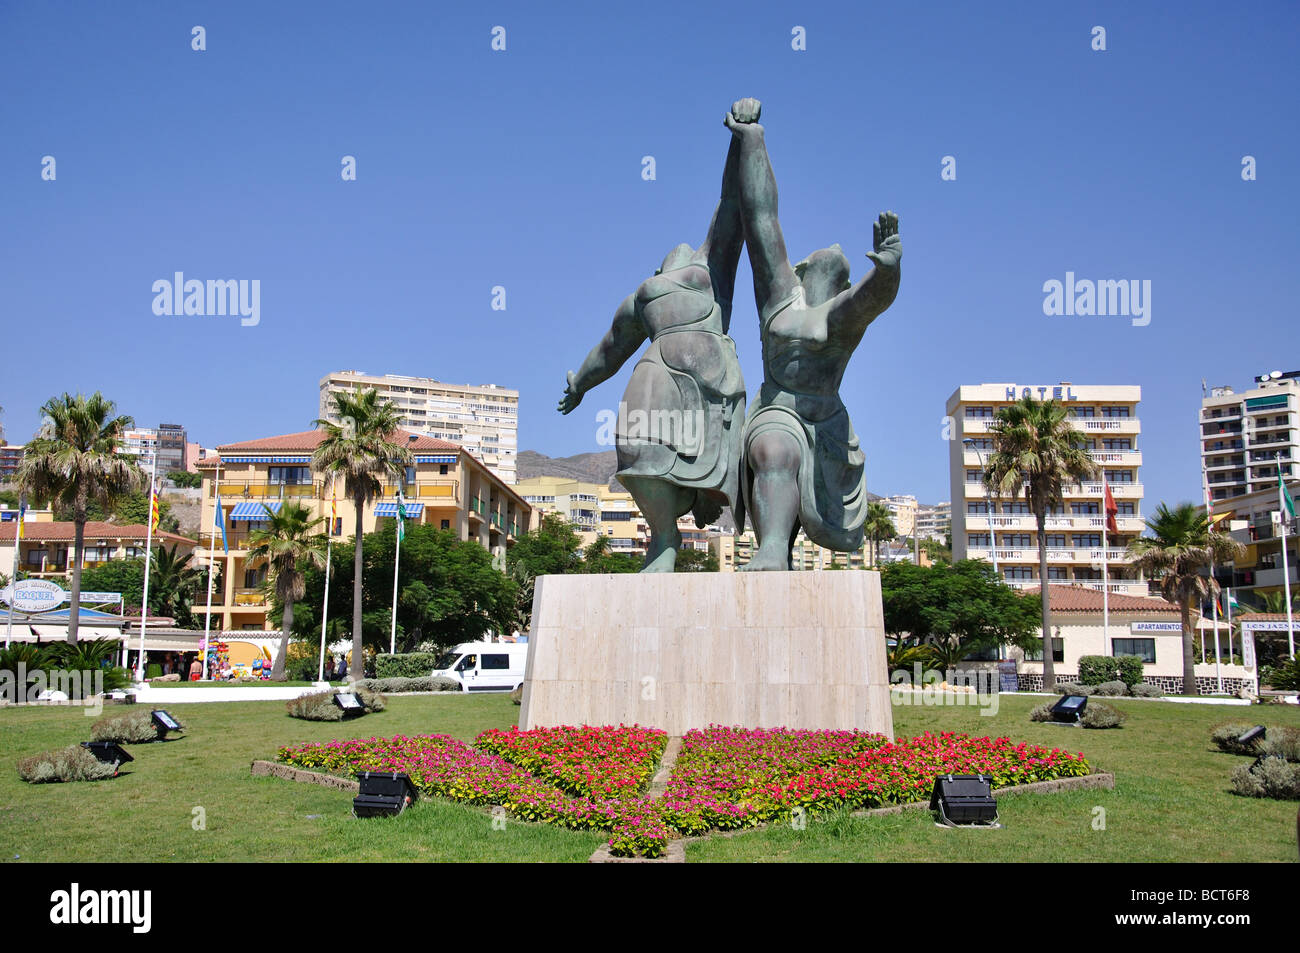 Statue on roundabout, Paseo Maritimo, Torremolinos, Costa del Sol, Malaga Province, Andalusia, Spain Stock Photo